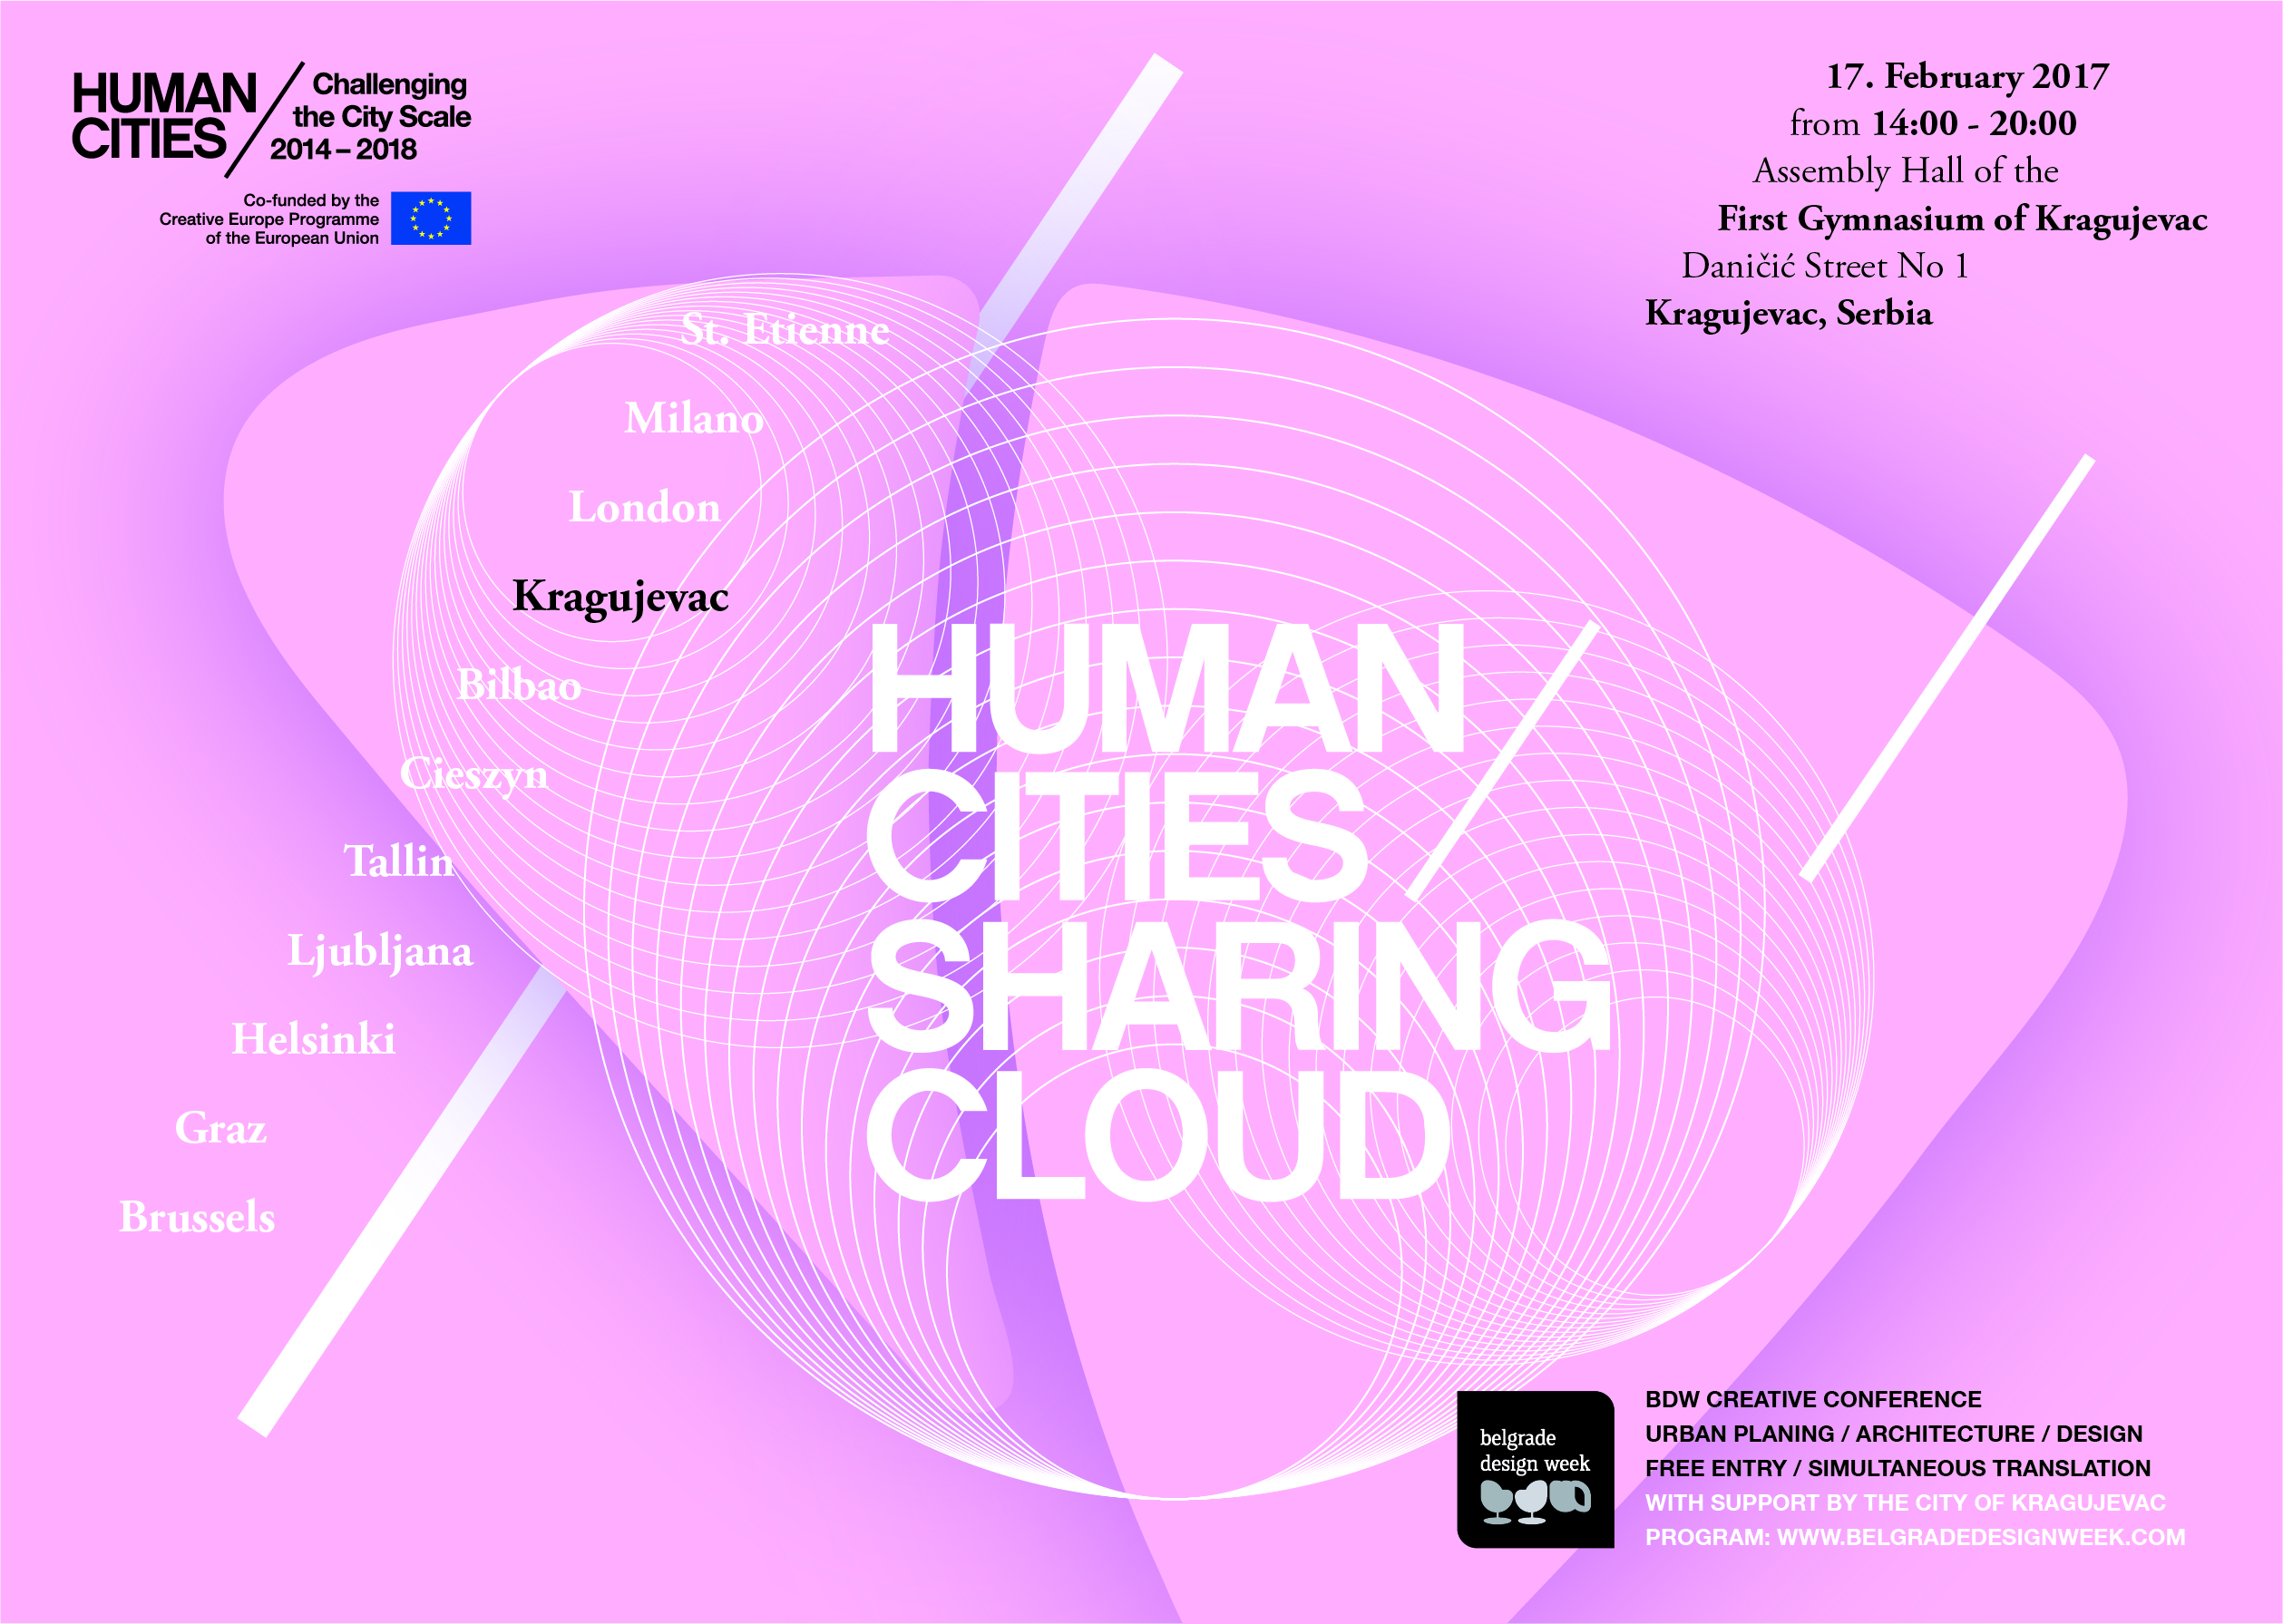 Human Cities/